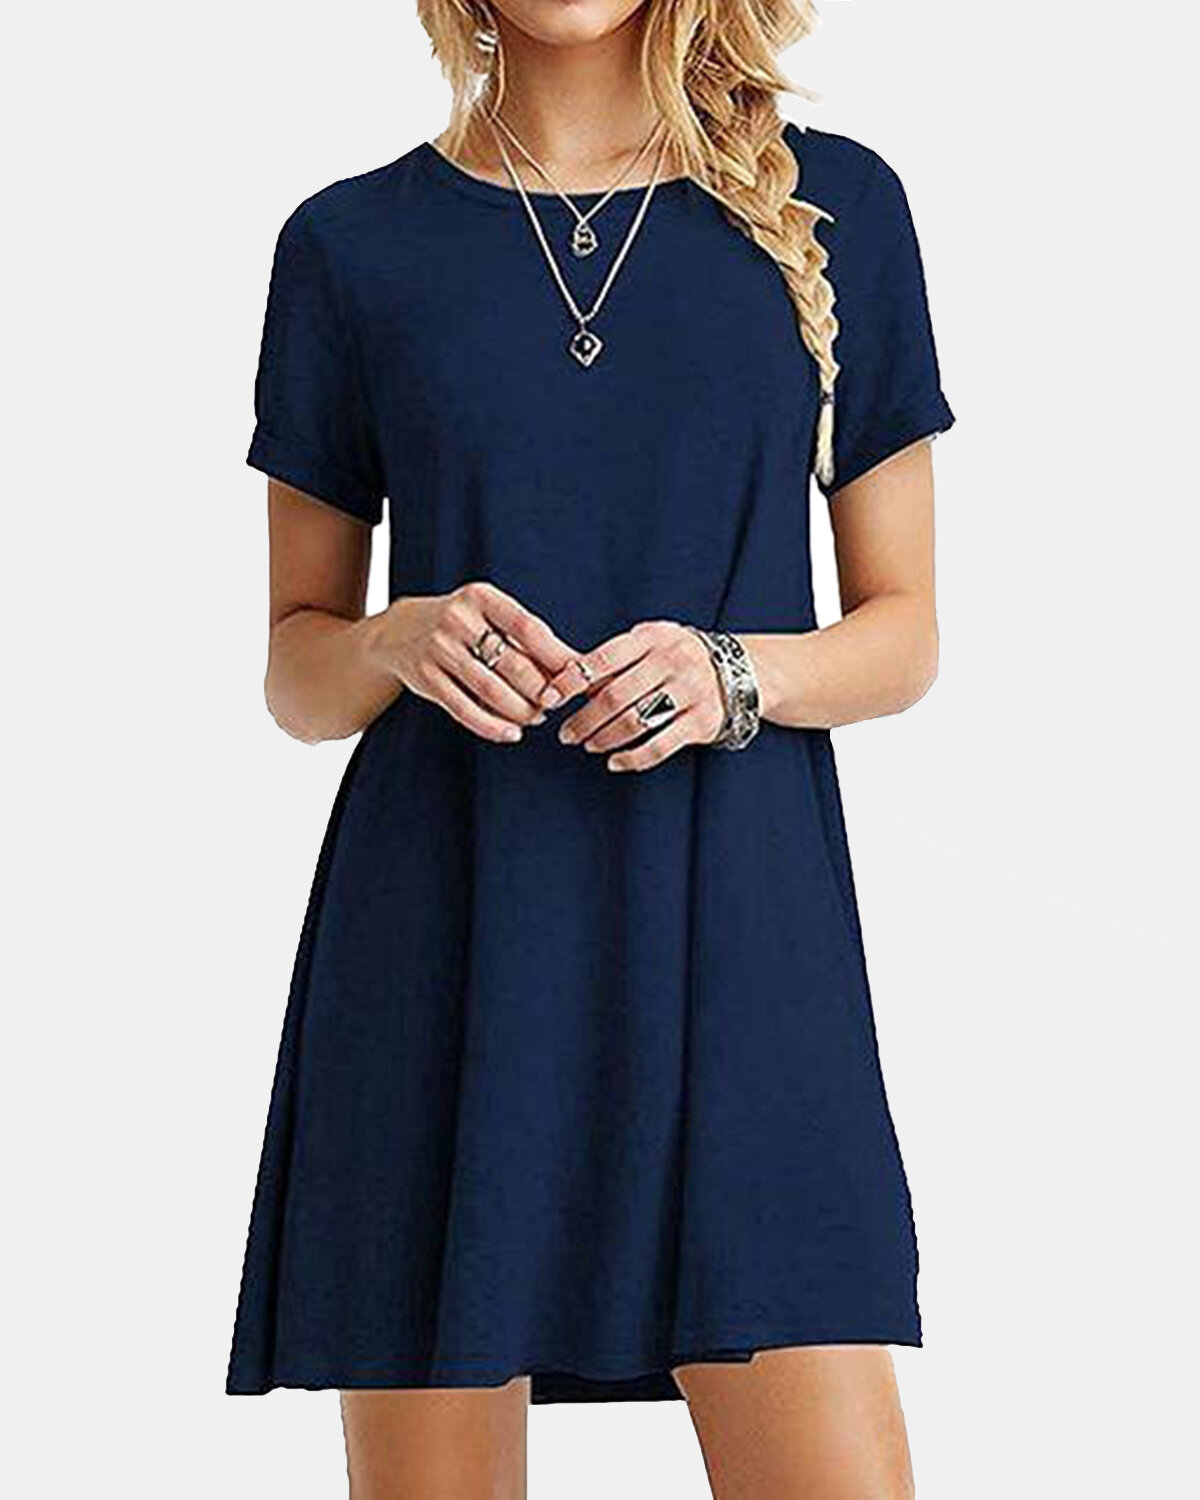 Short Sleeve Casual Loose O-neck Summer Mini Dress For Women